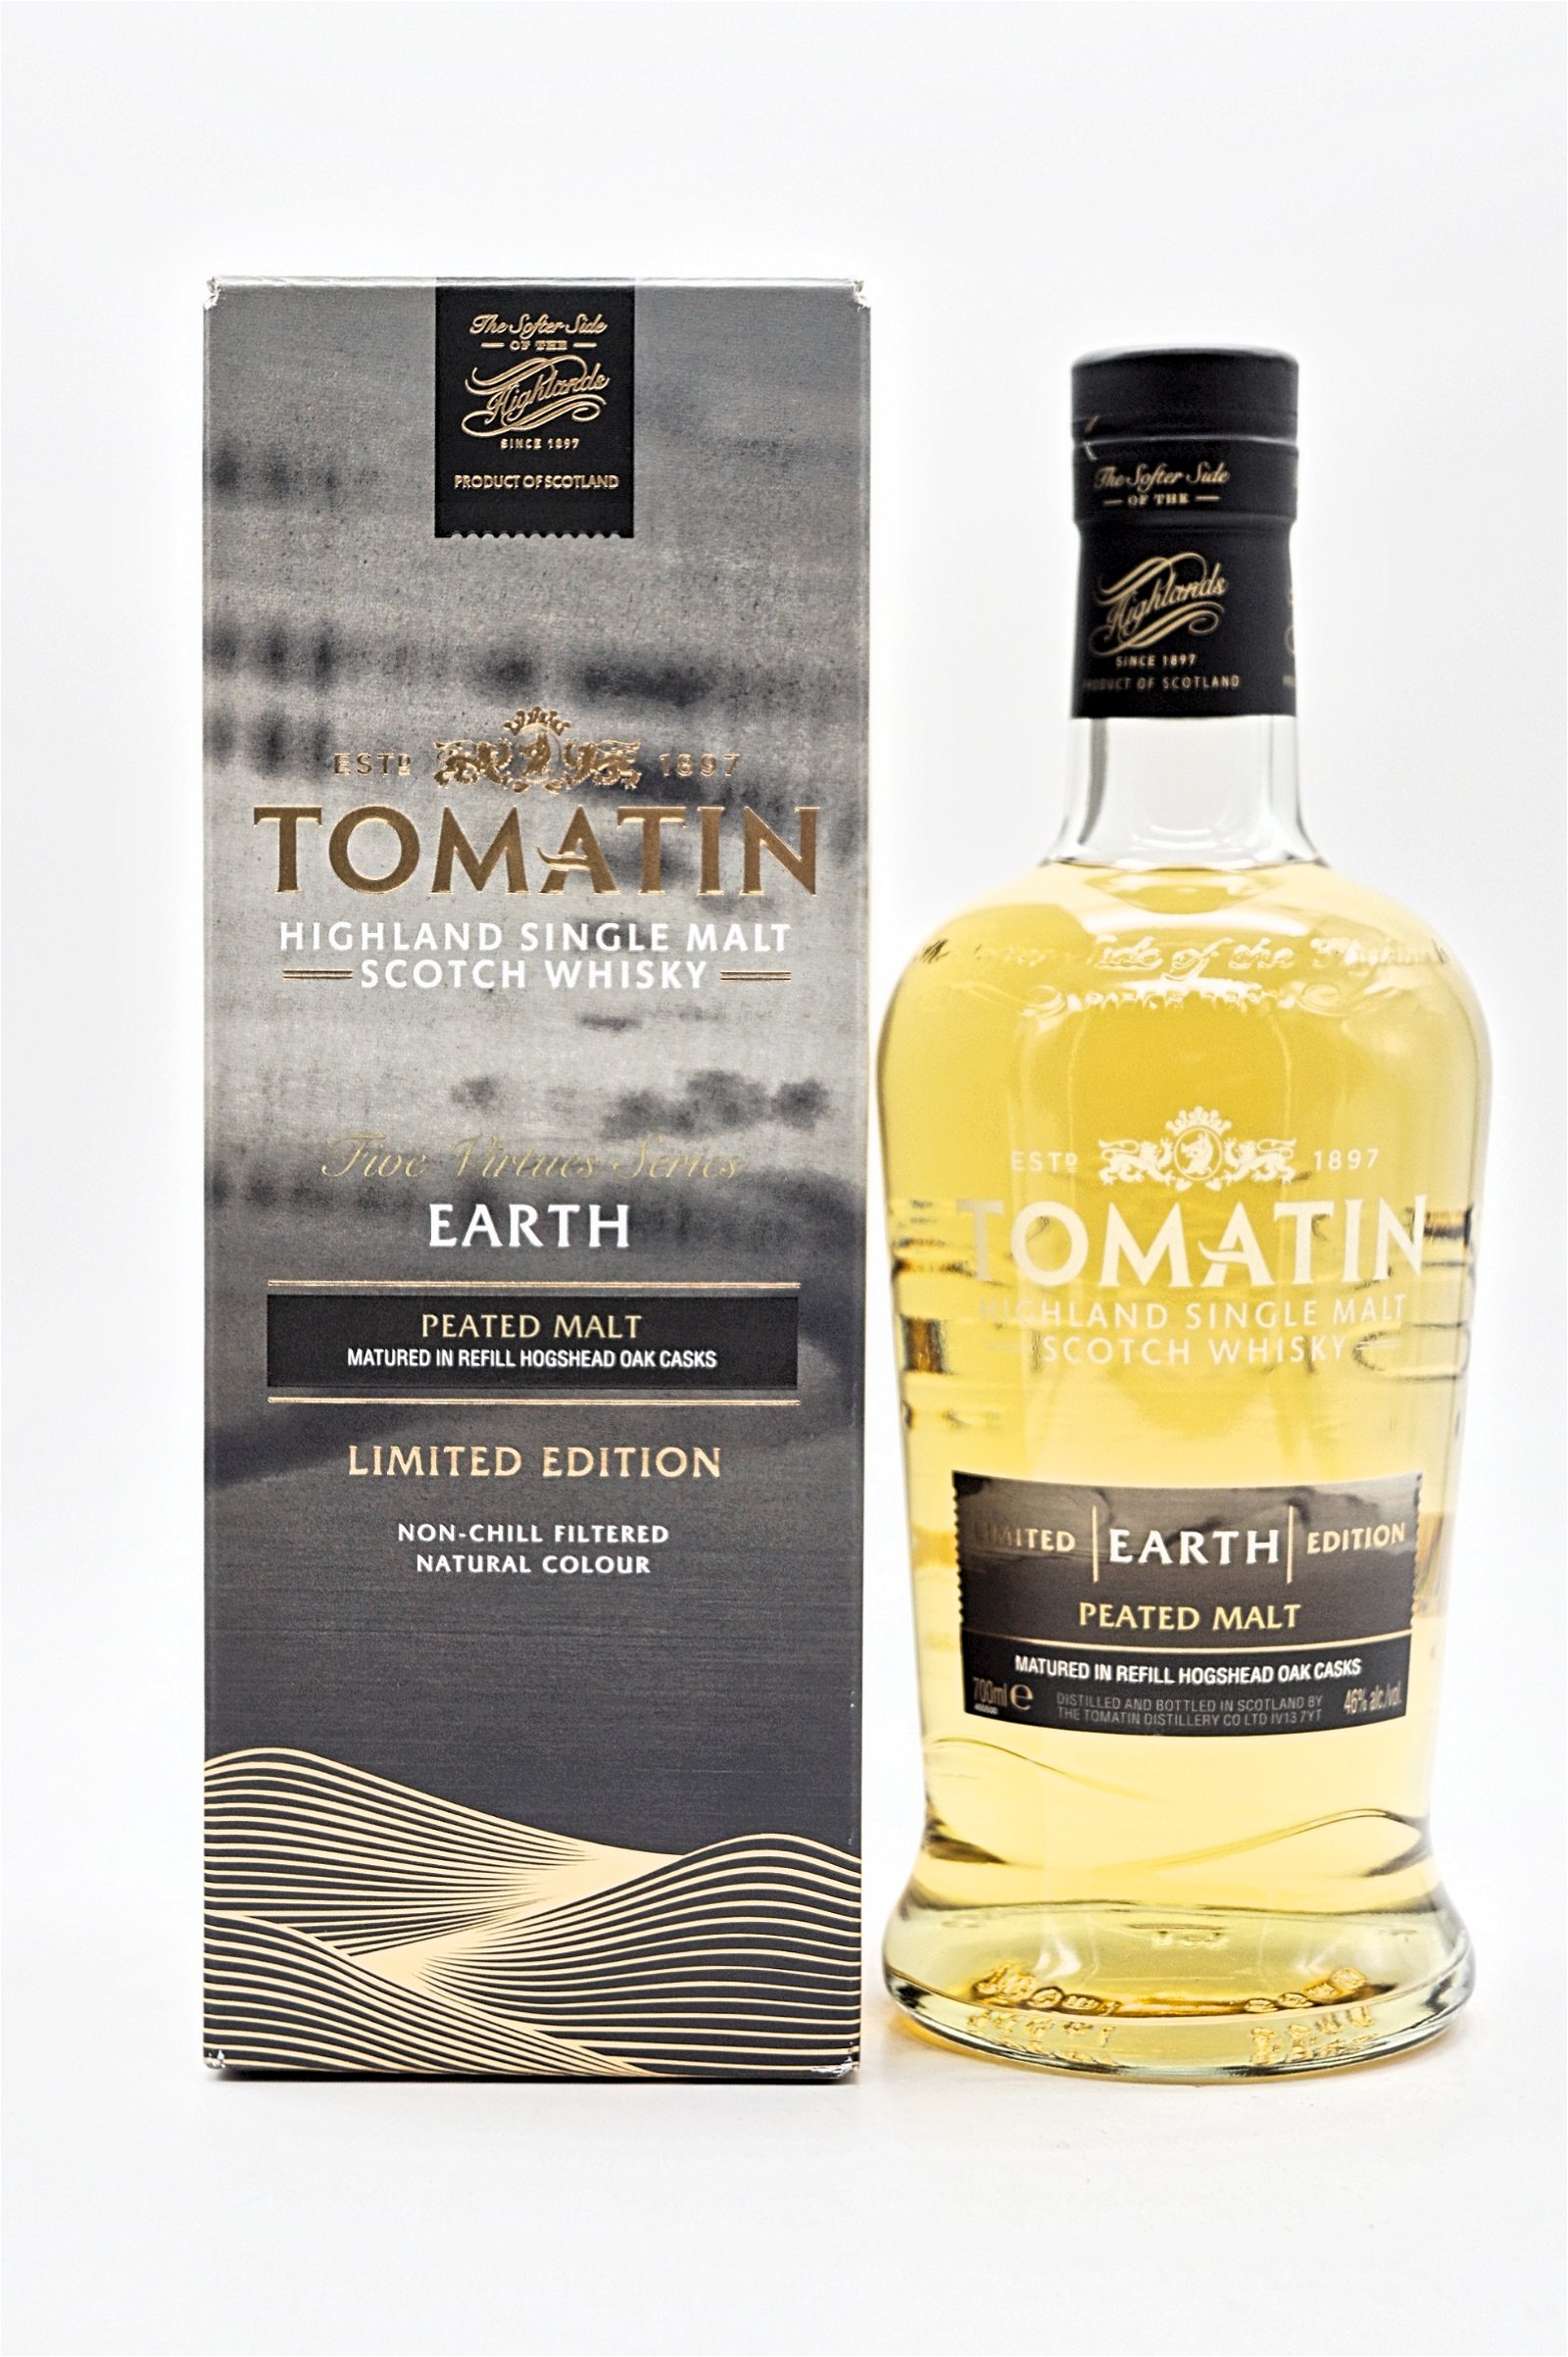 Tomatin Earth Limited Edition Peated Malt Highland Single Malt Scotch Whisky